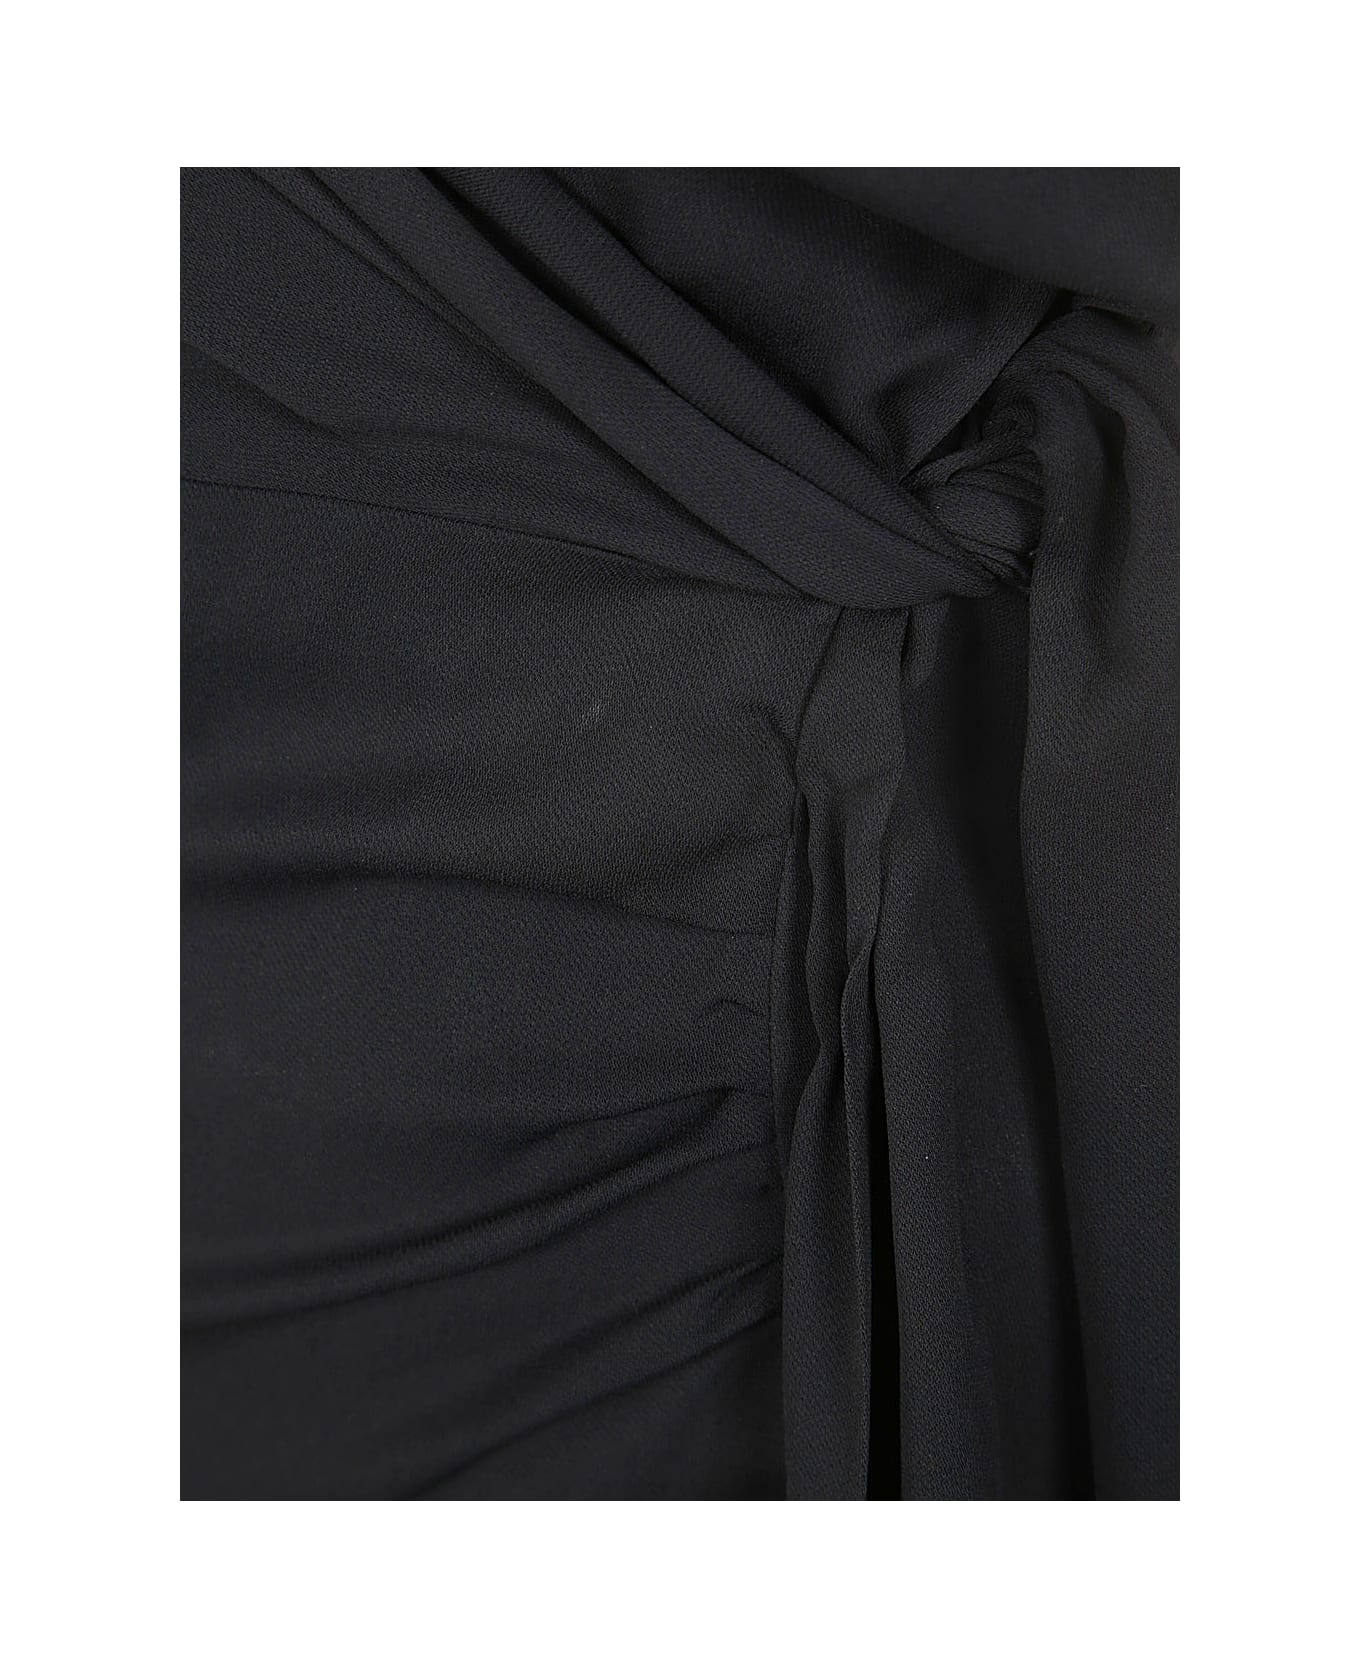 Elisabetta Franchi Long Sleeves Dress - Black